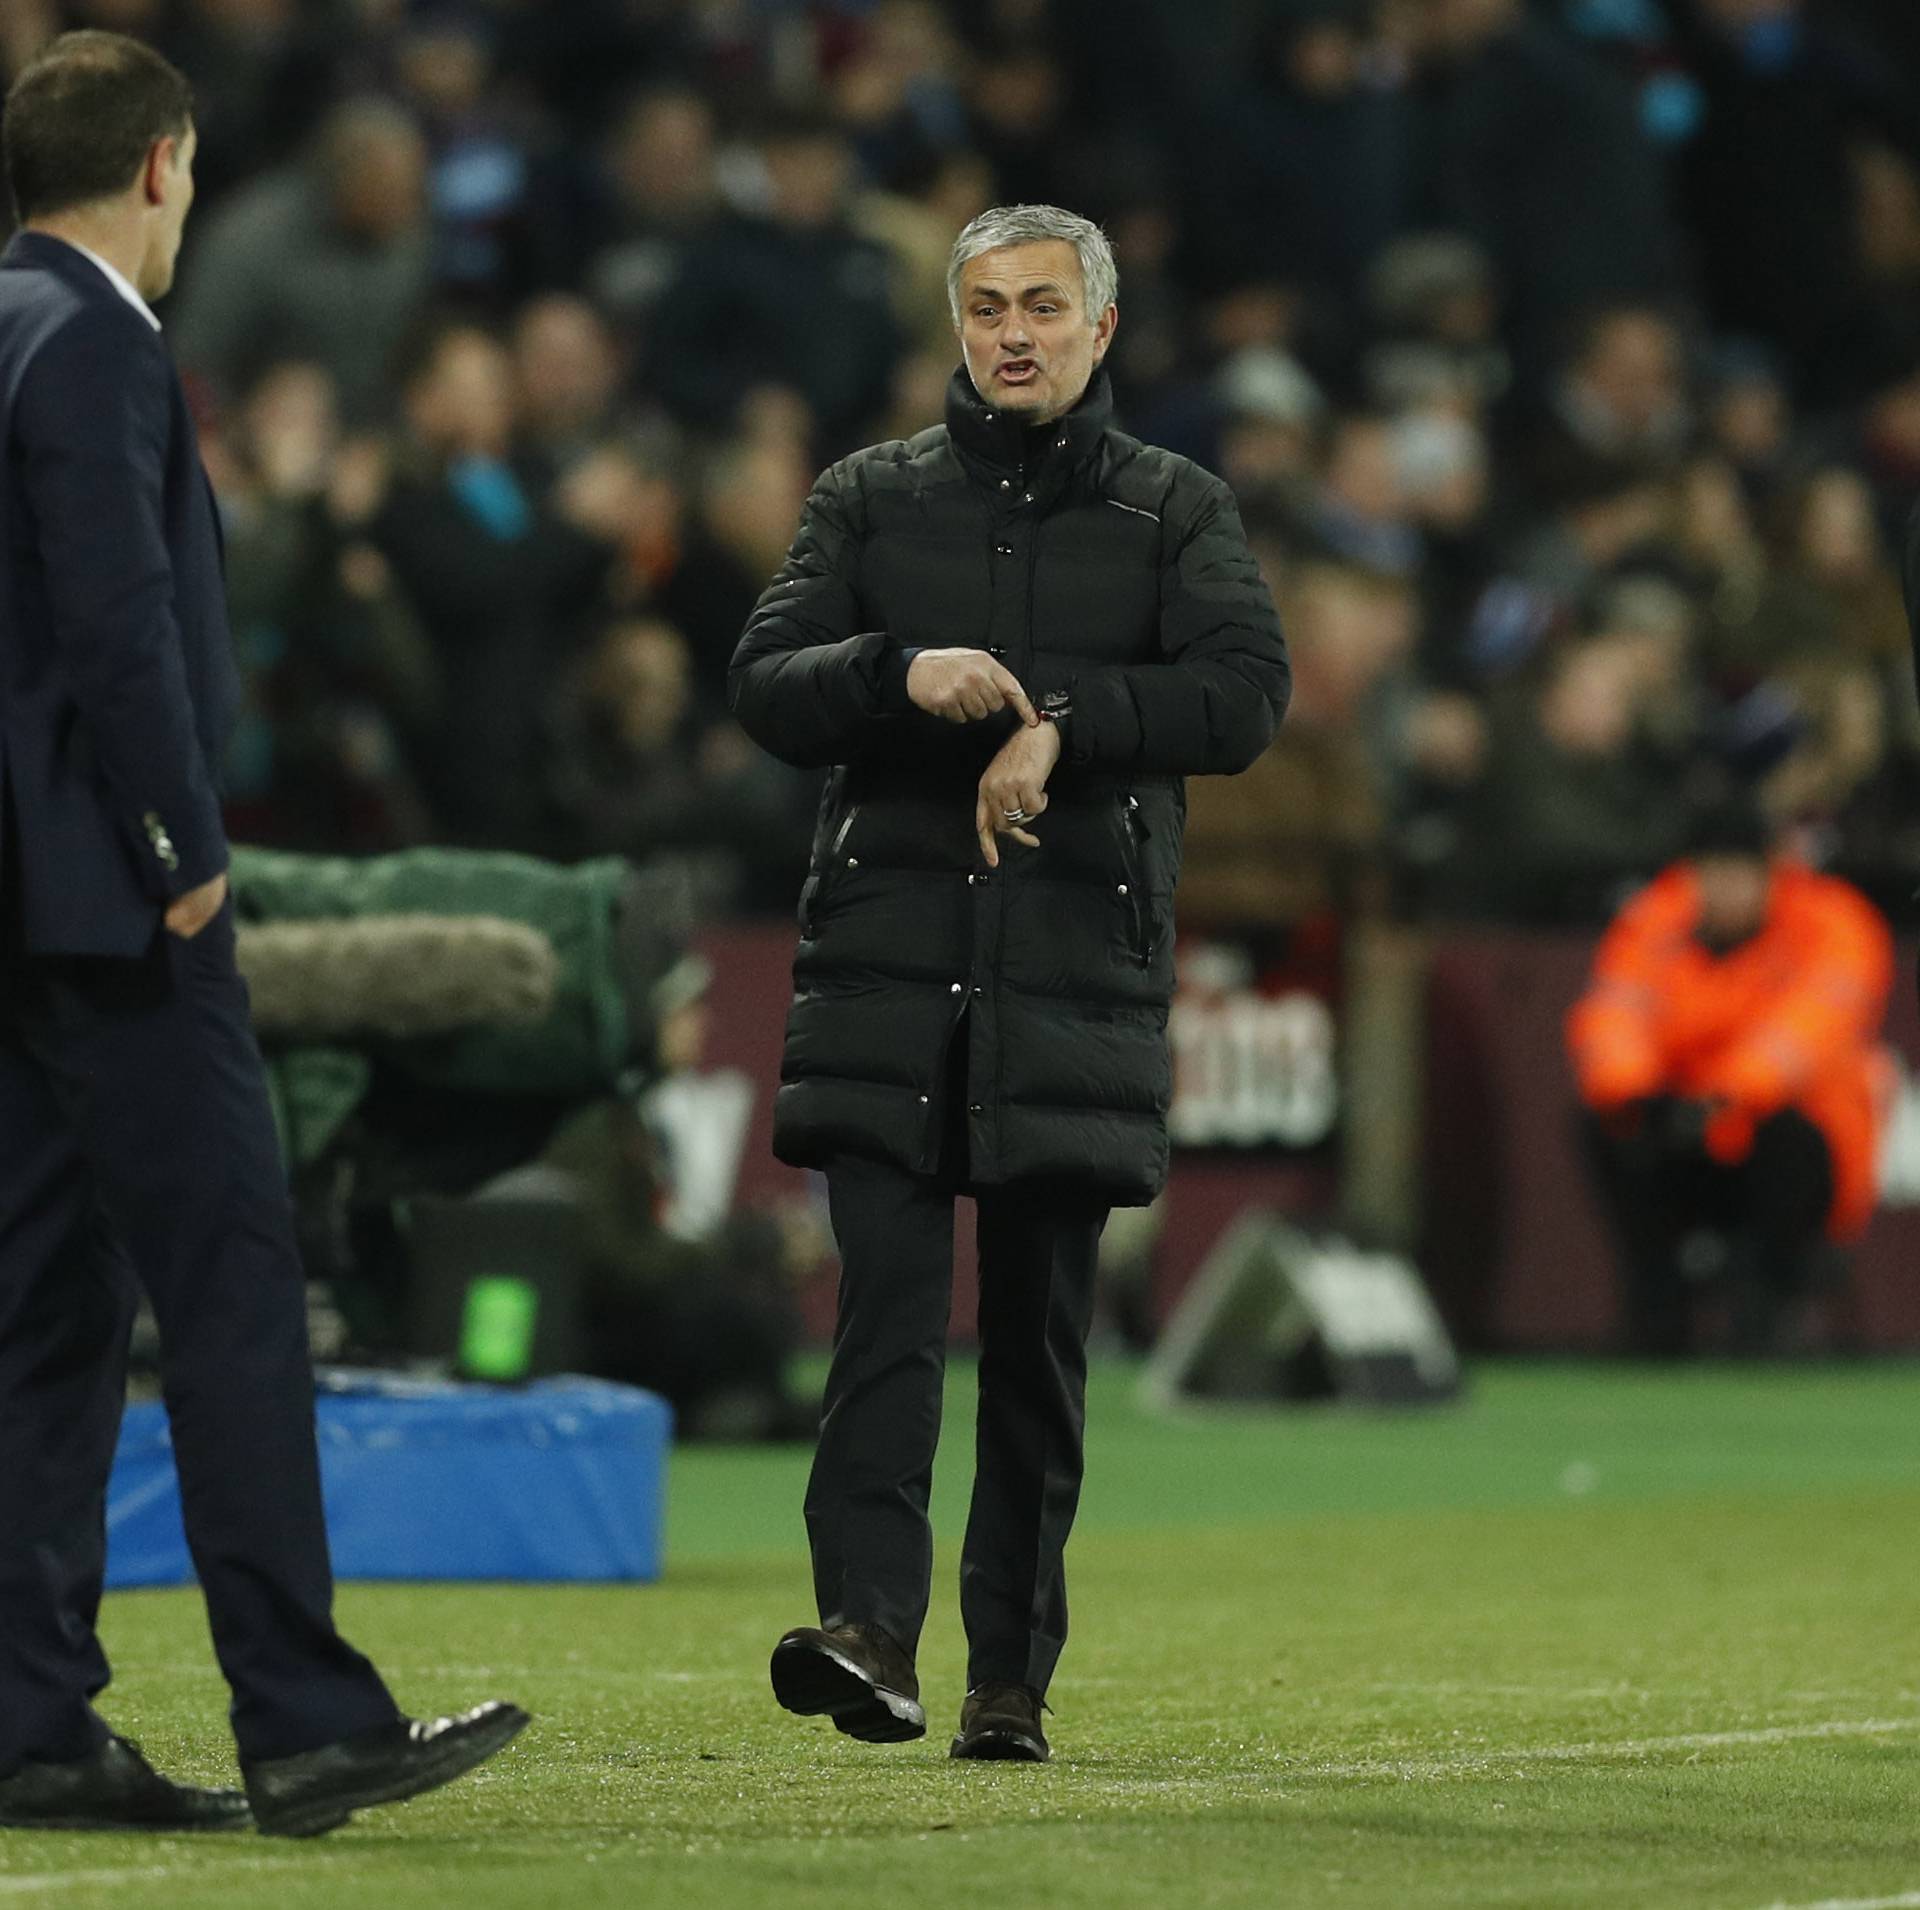 West Ham United manager Slaven Bilic and Manchester United manager Jose Mourinho